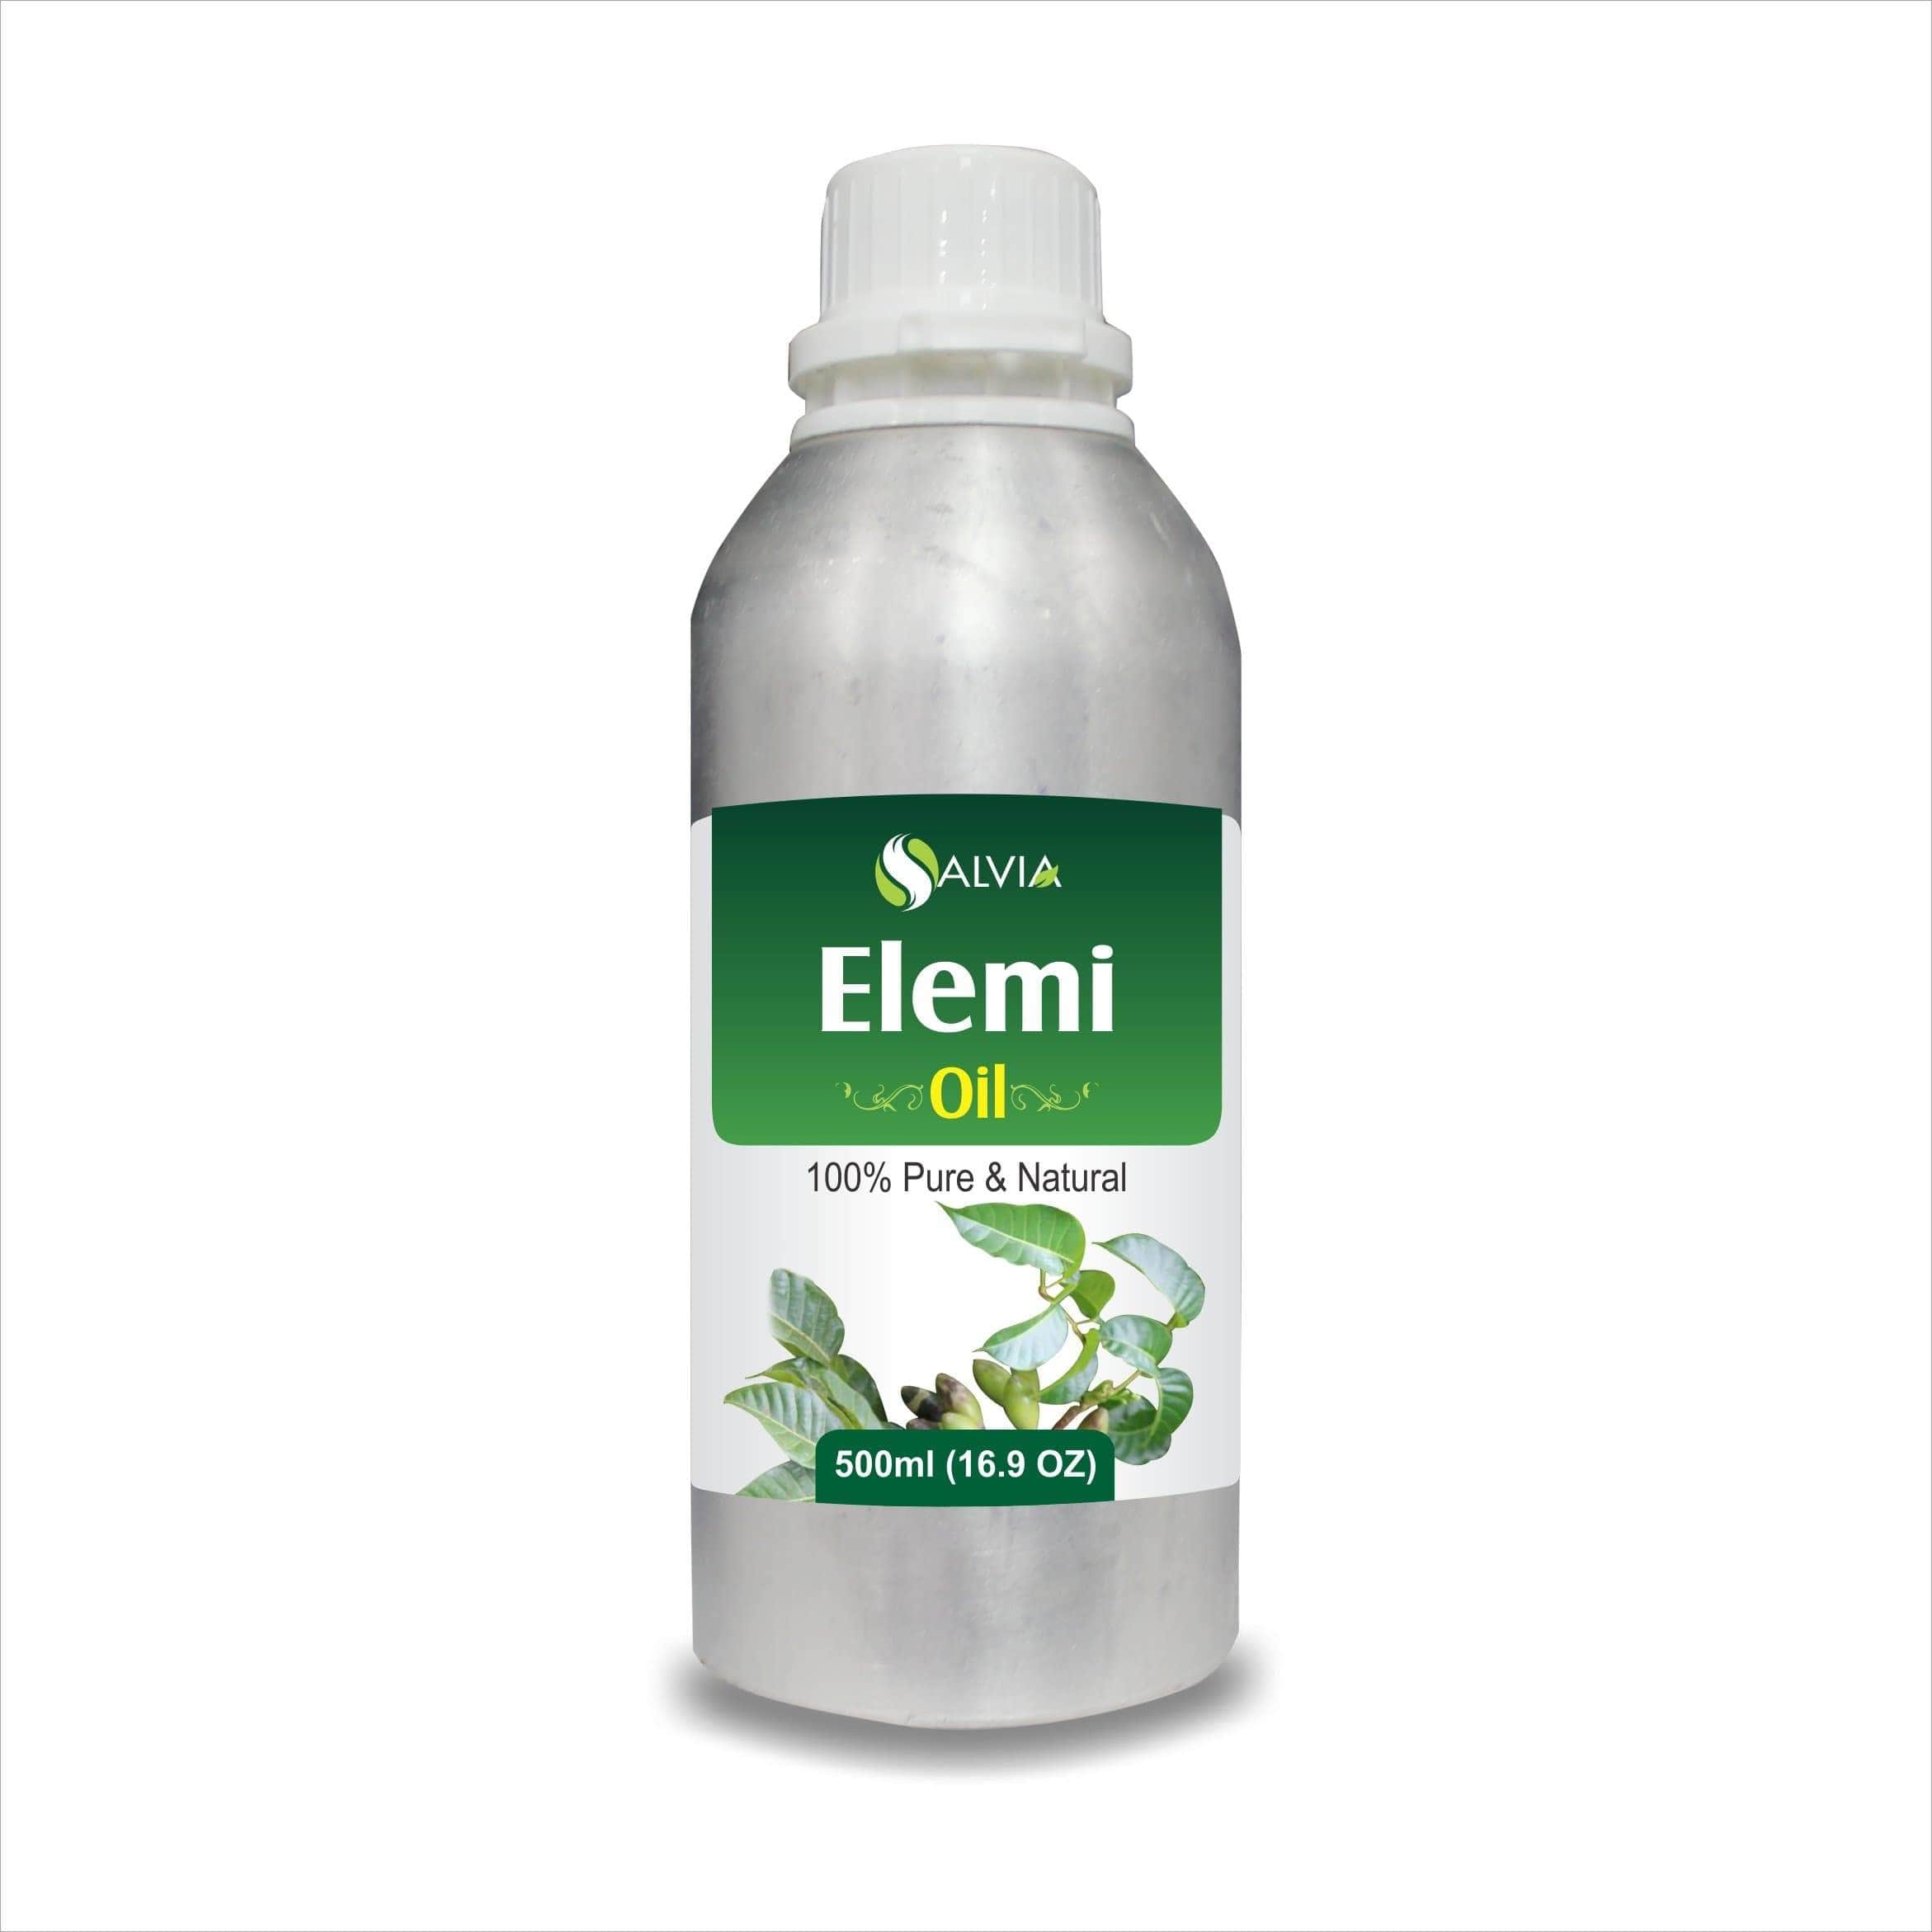 elemi oil skin benefits